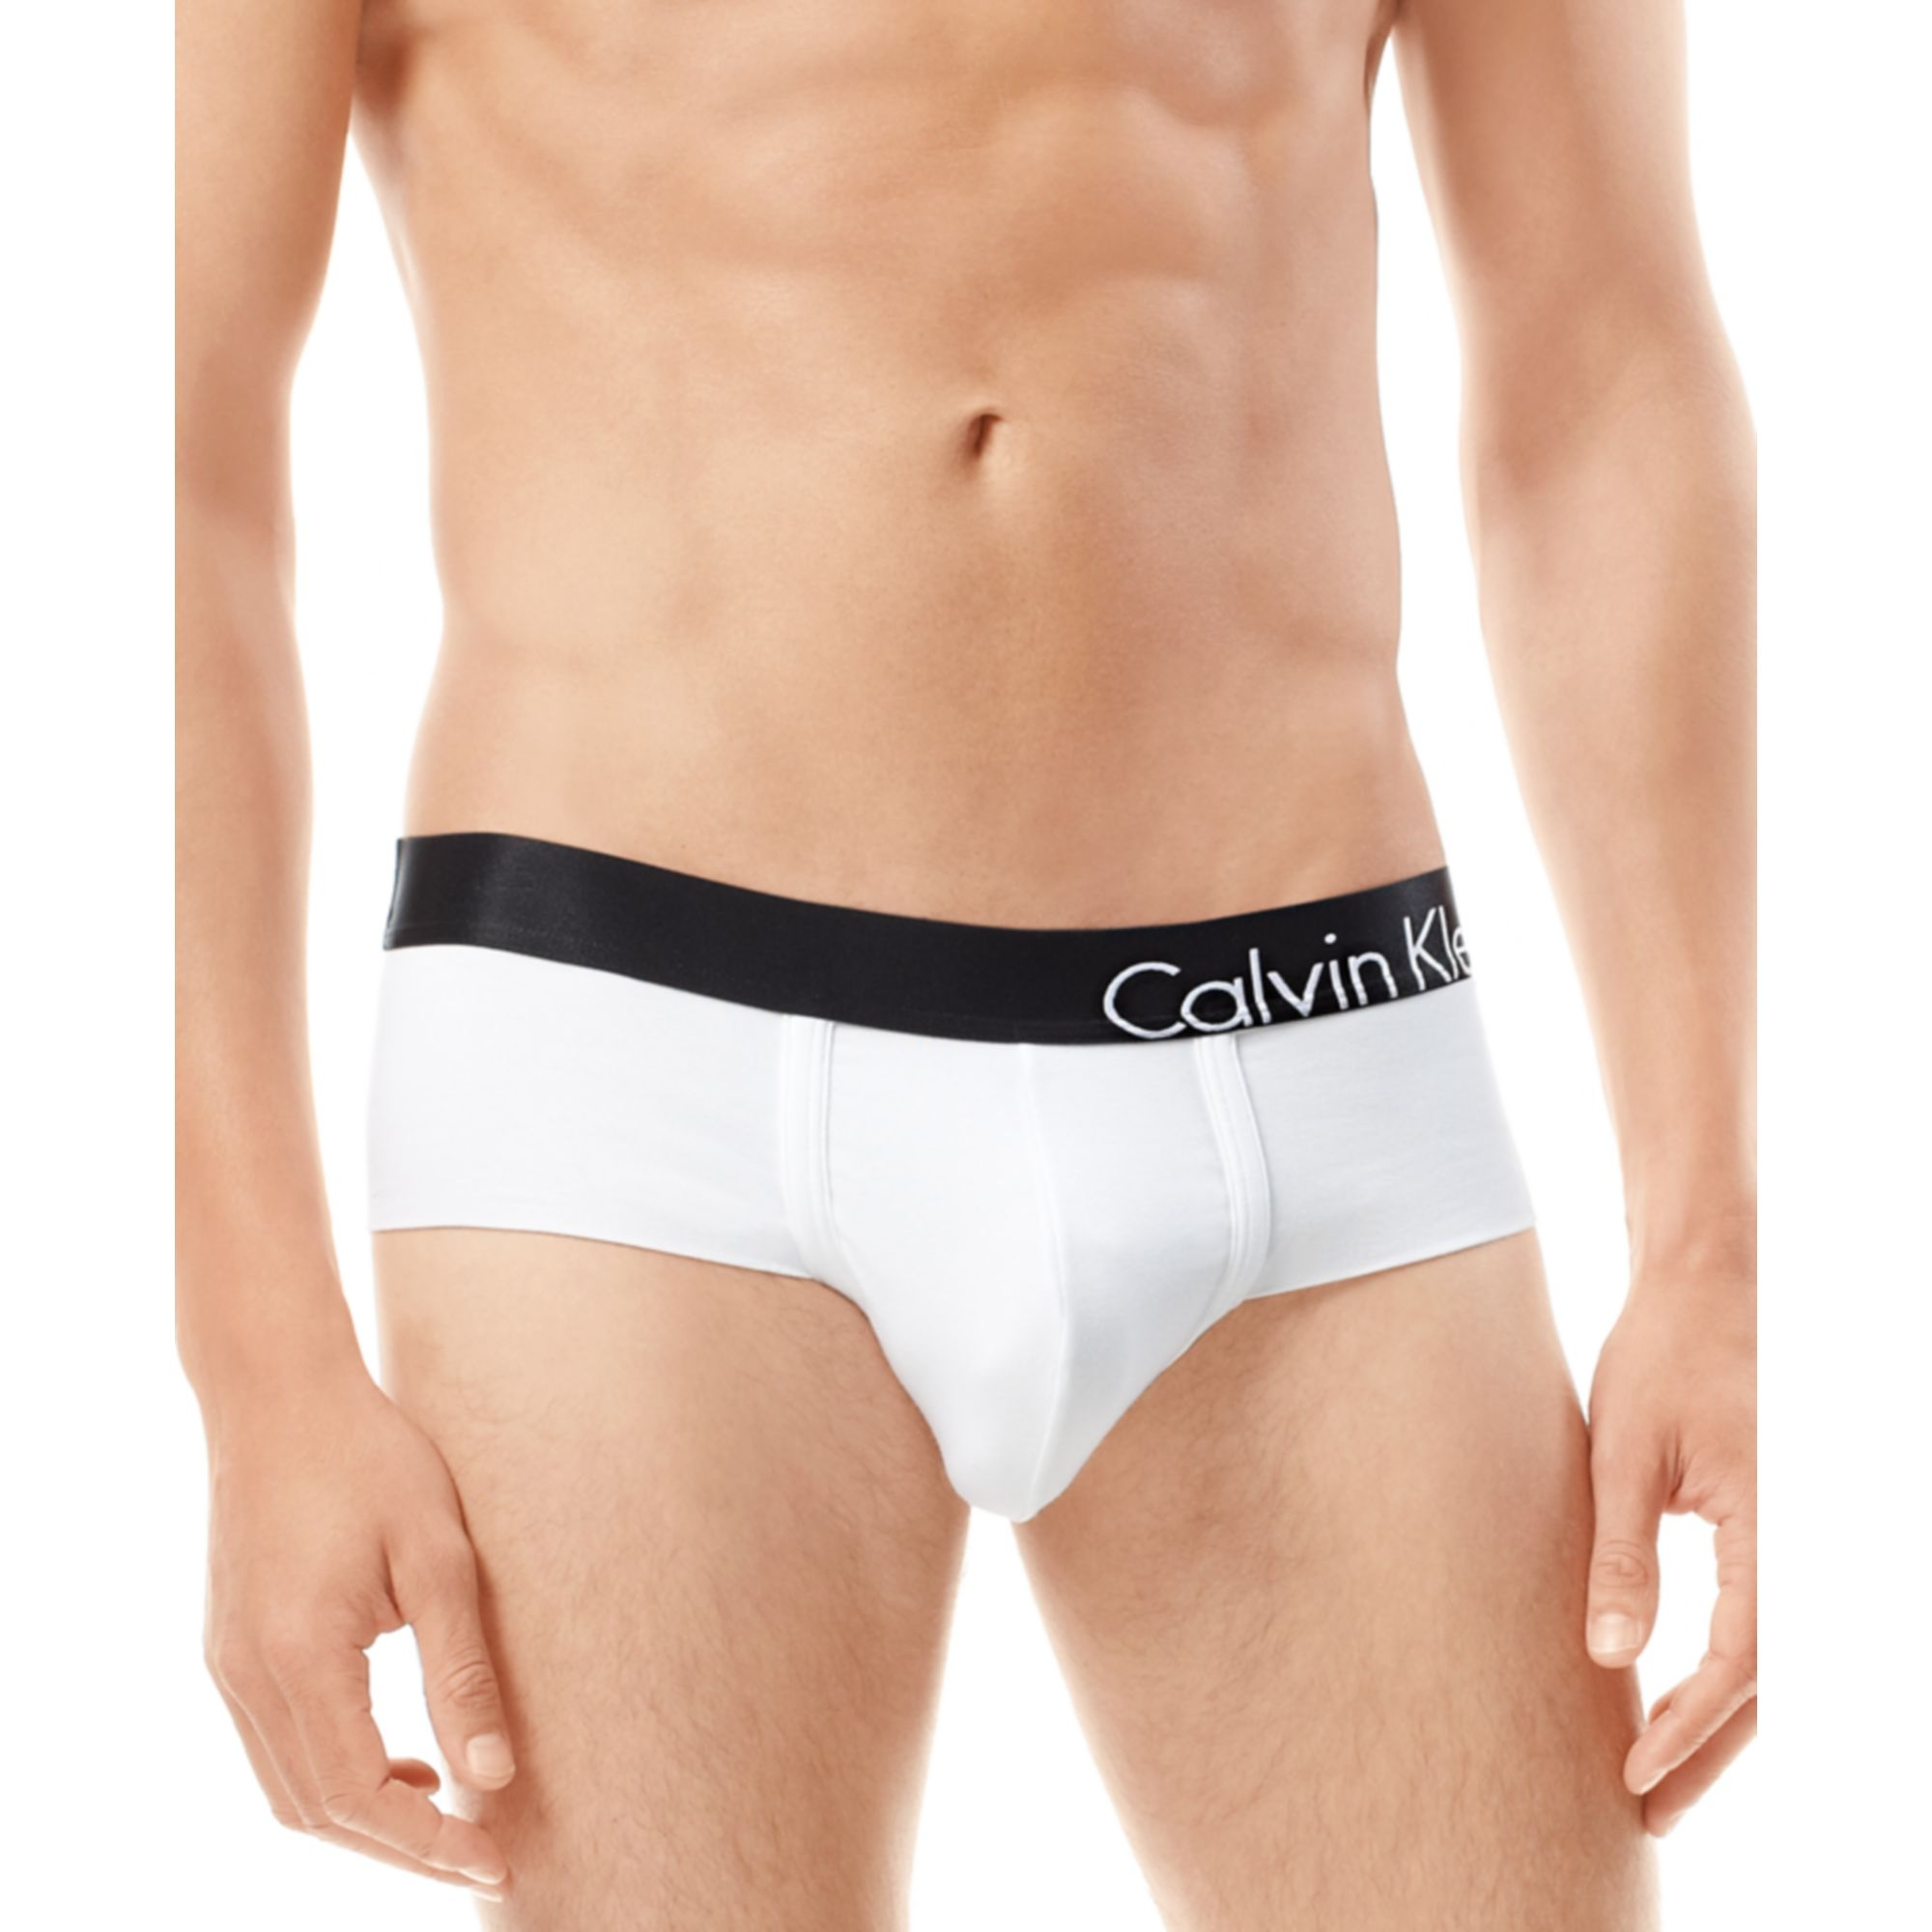 Calvin Klein Underwear Bold Top Sellers, SAVE 40% - aveclumiere.com